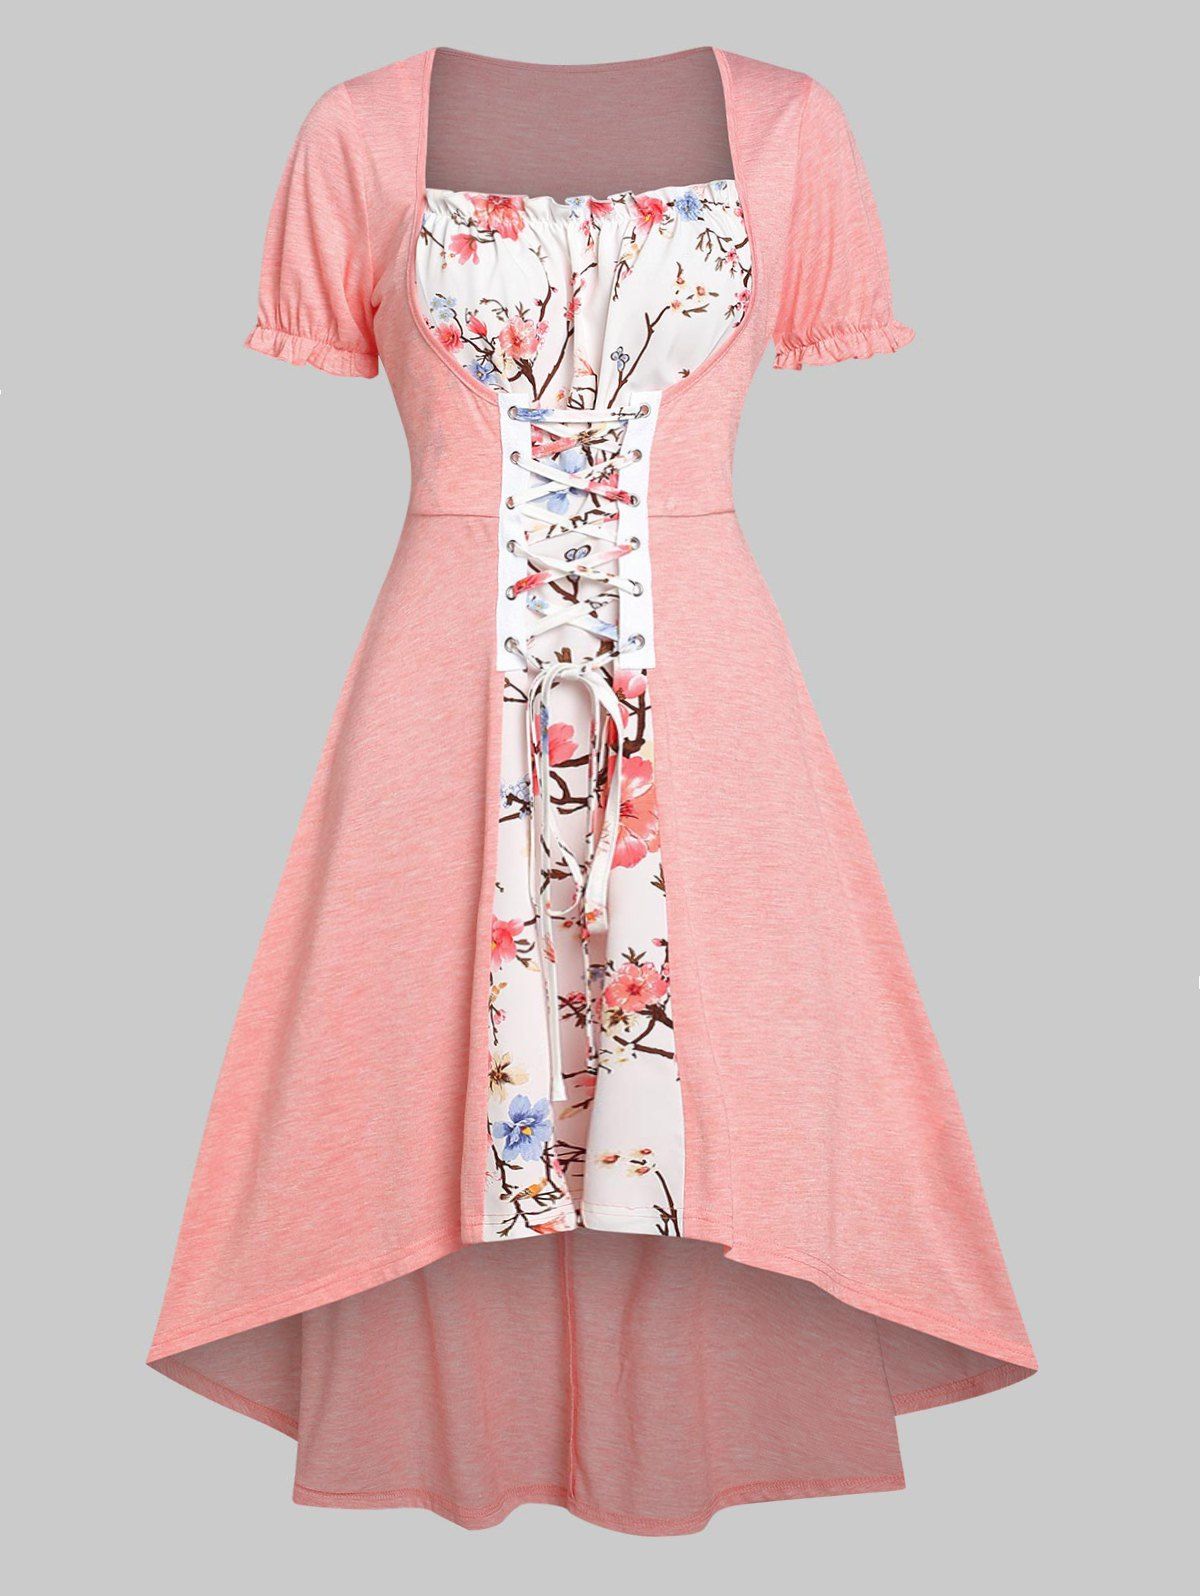 Floral Print Lace Up Faux Twinset High Low Dress - LIGHT PINK L